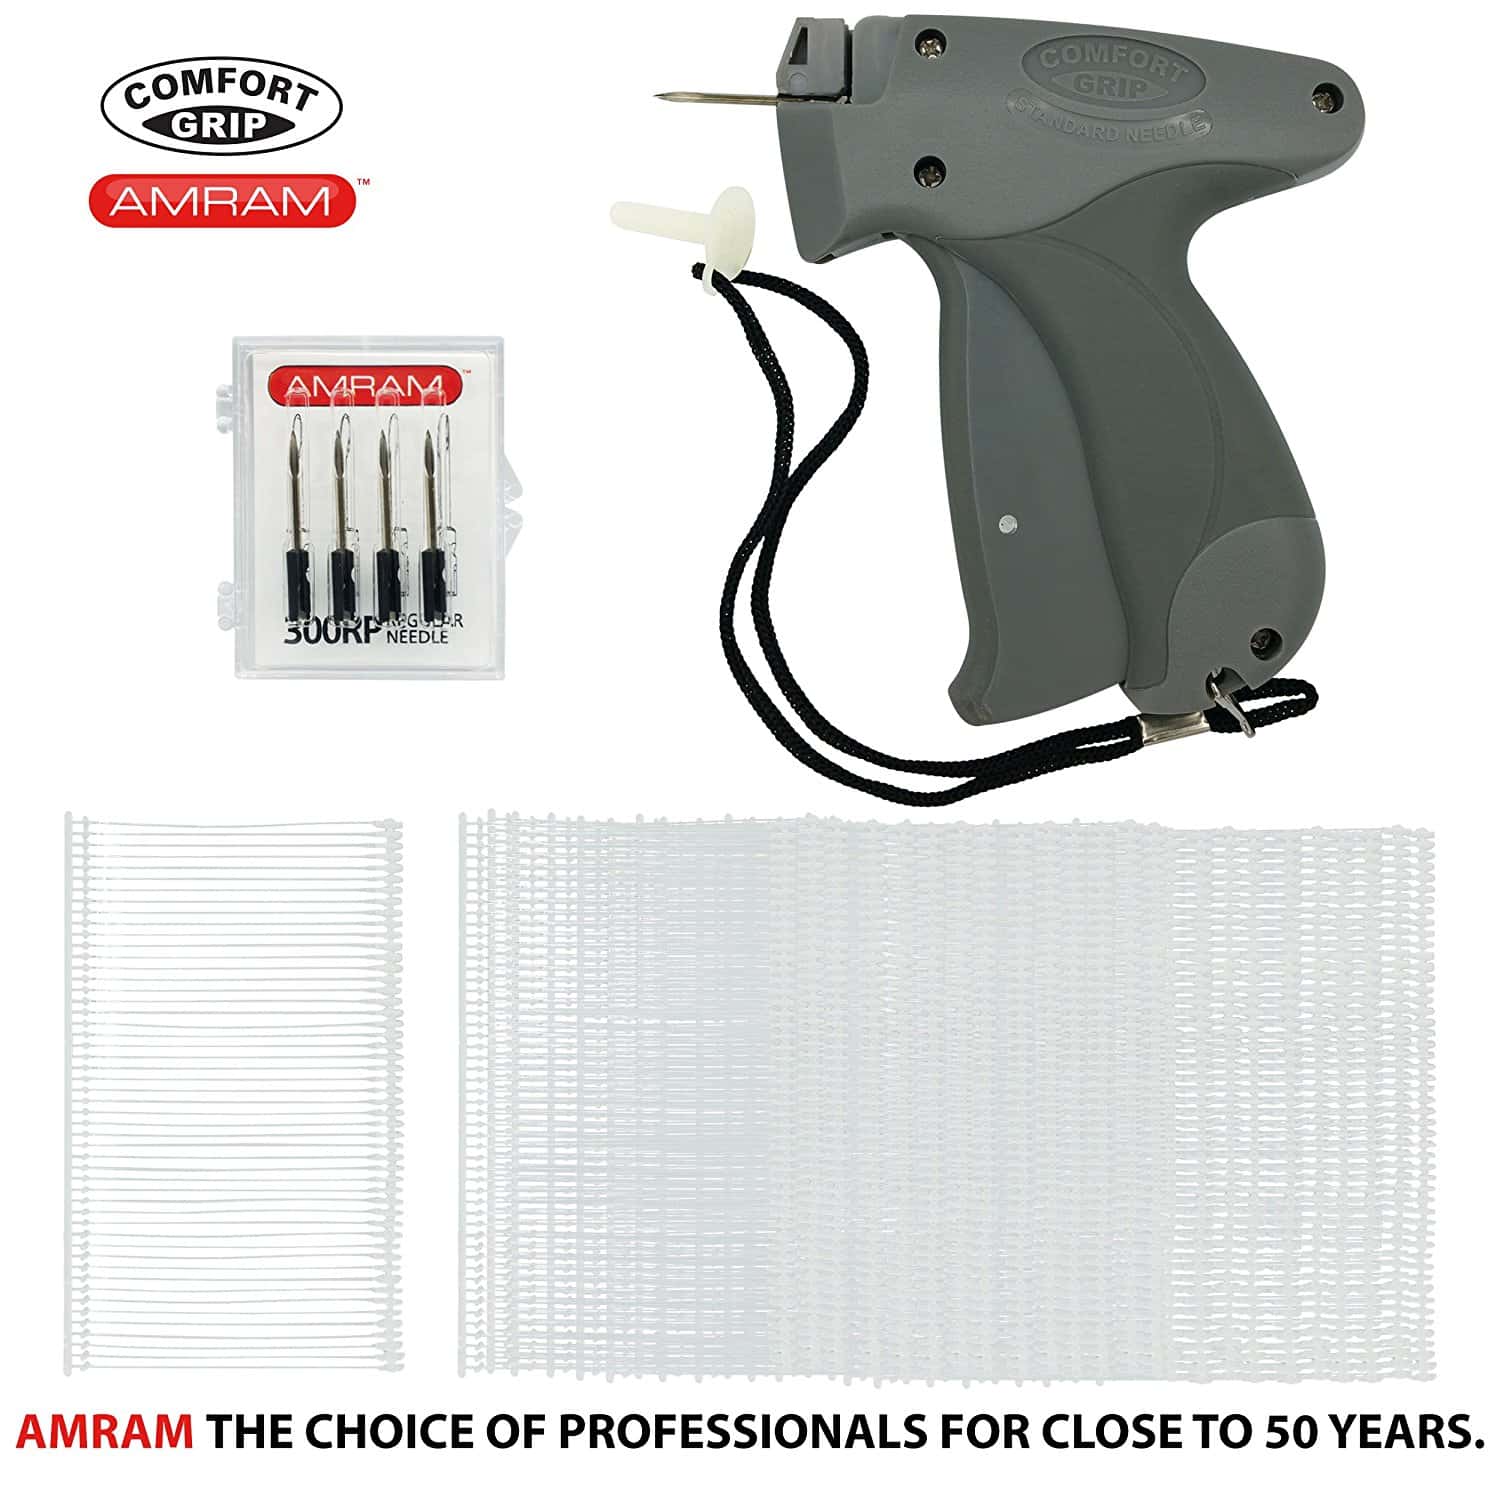 AMRAM Comfort Grip STANDARD Tagging Gun Pro Kit. Includes 1250 2" STANDARD Attachments